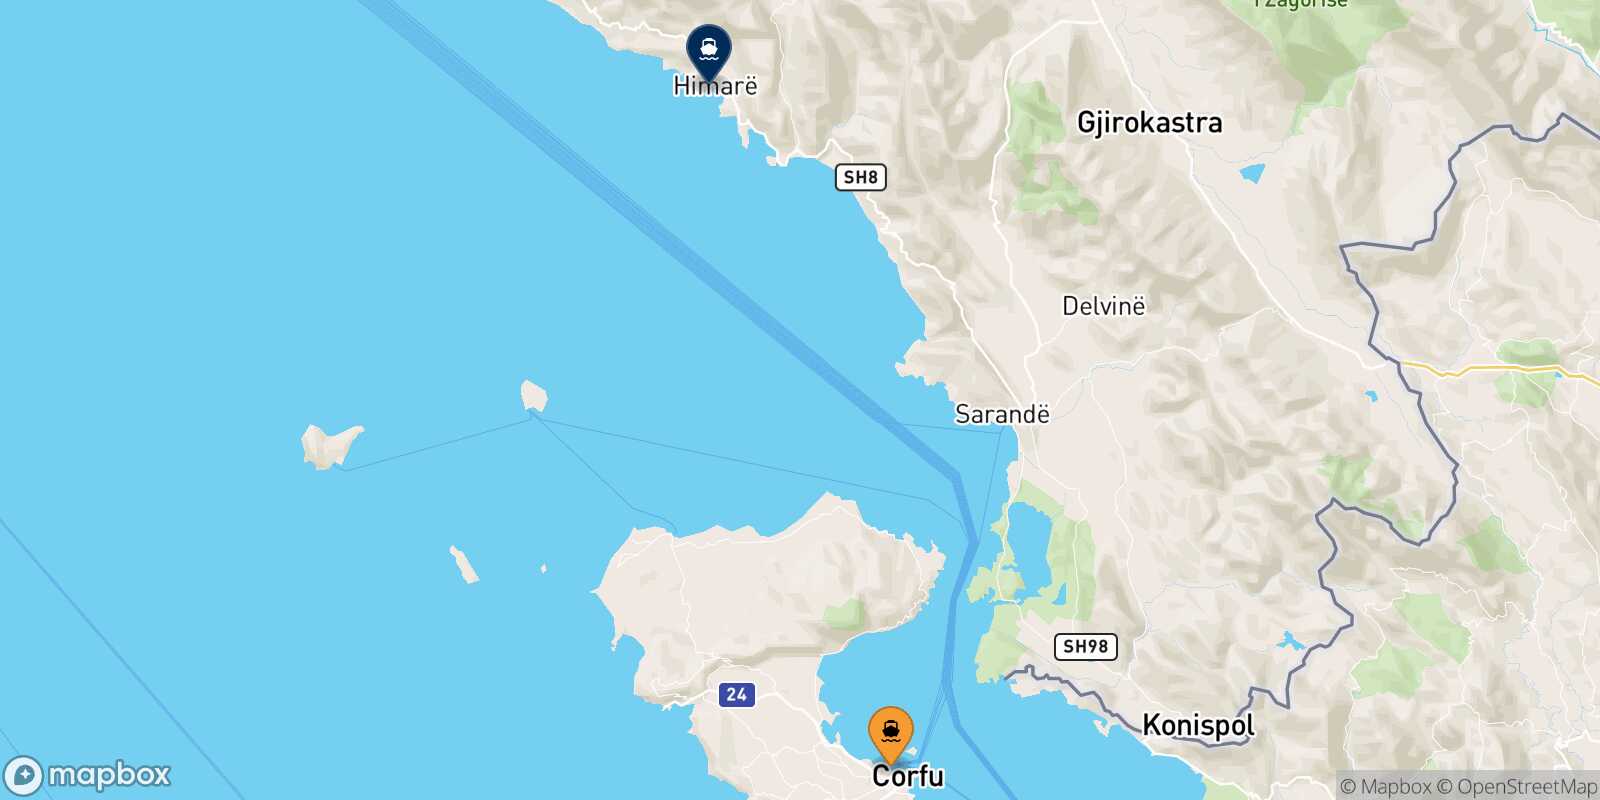 Corfu Himare route map